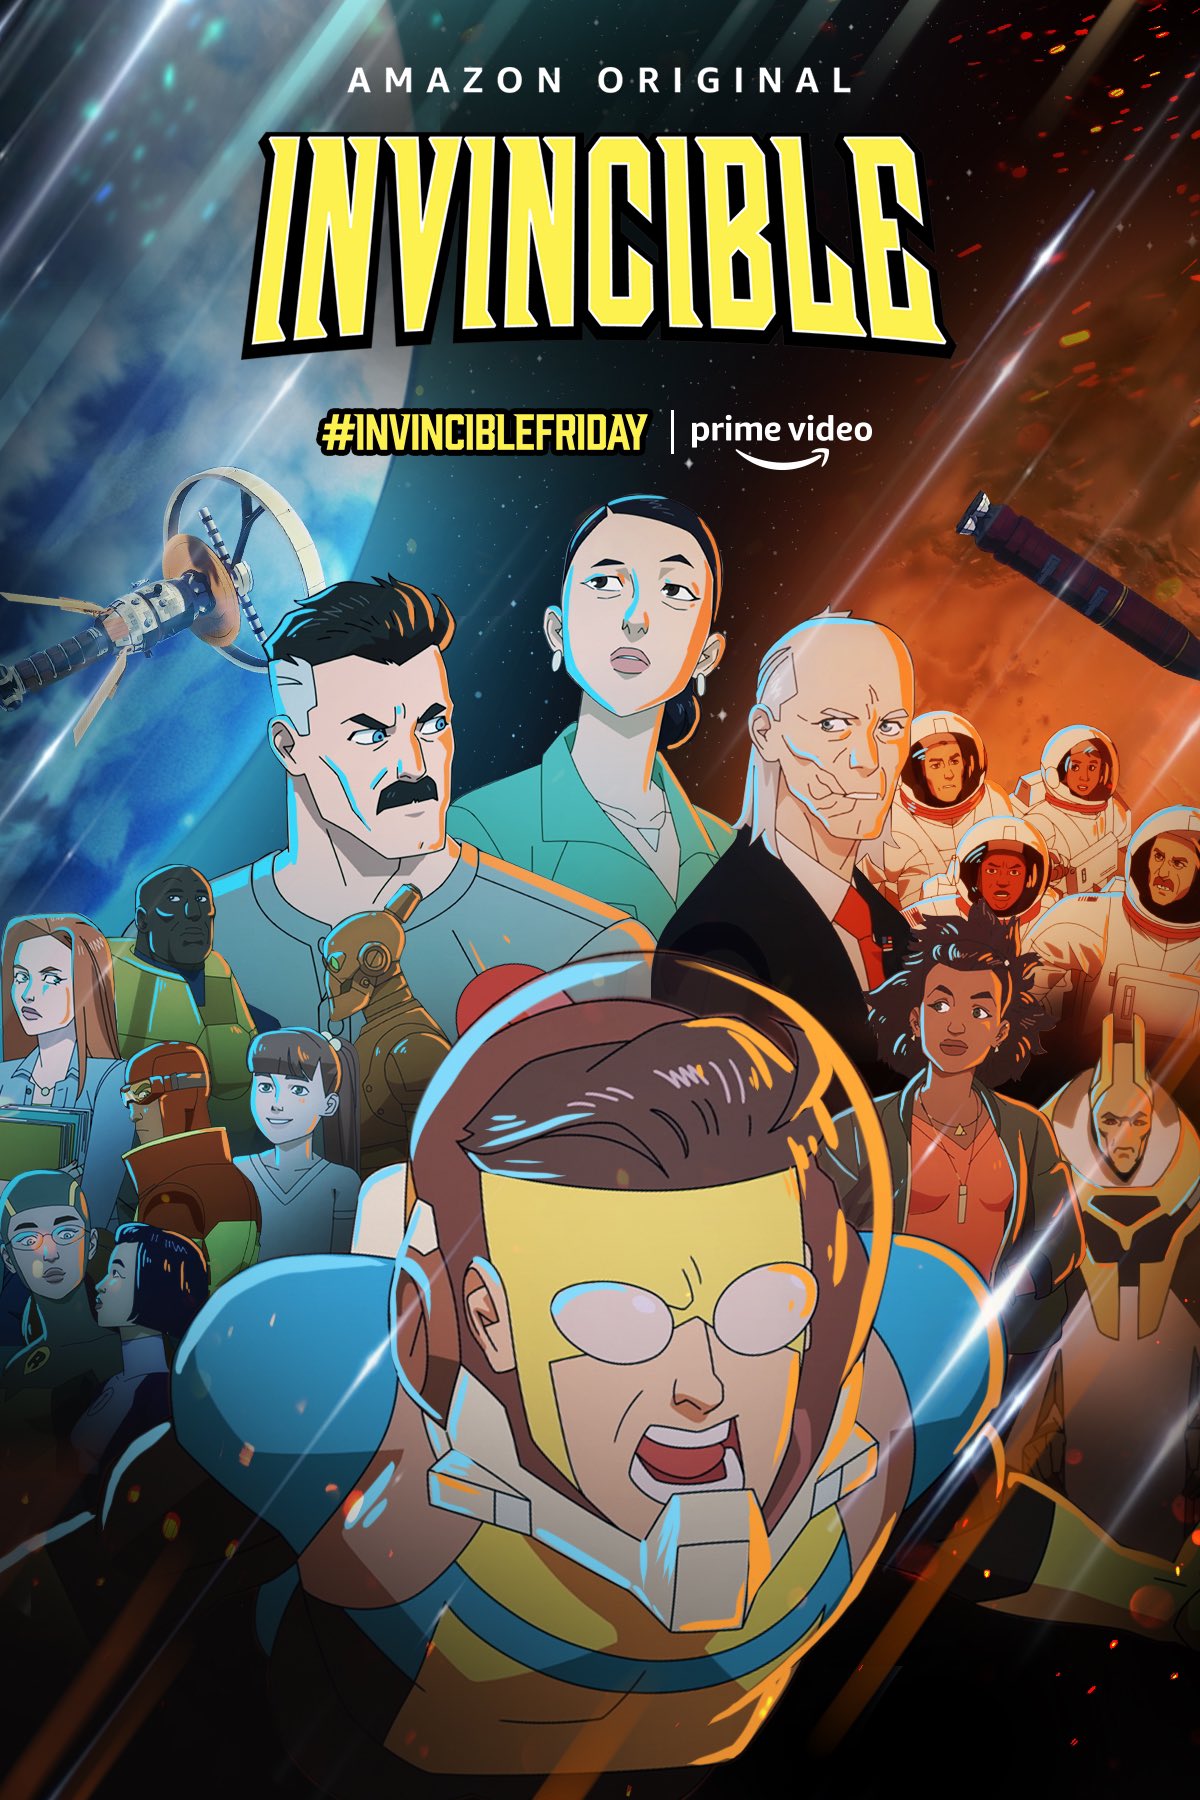 Invincible Season 2 Episode 4 Poster Released